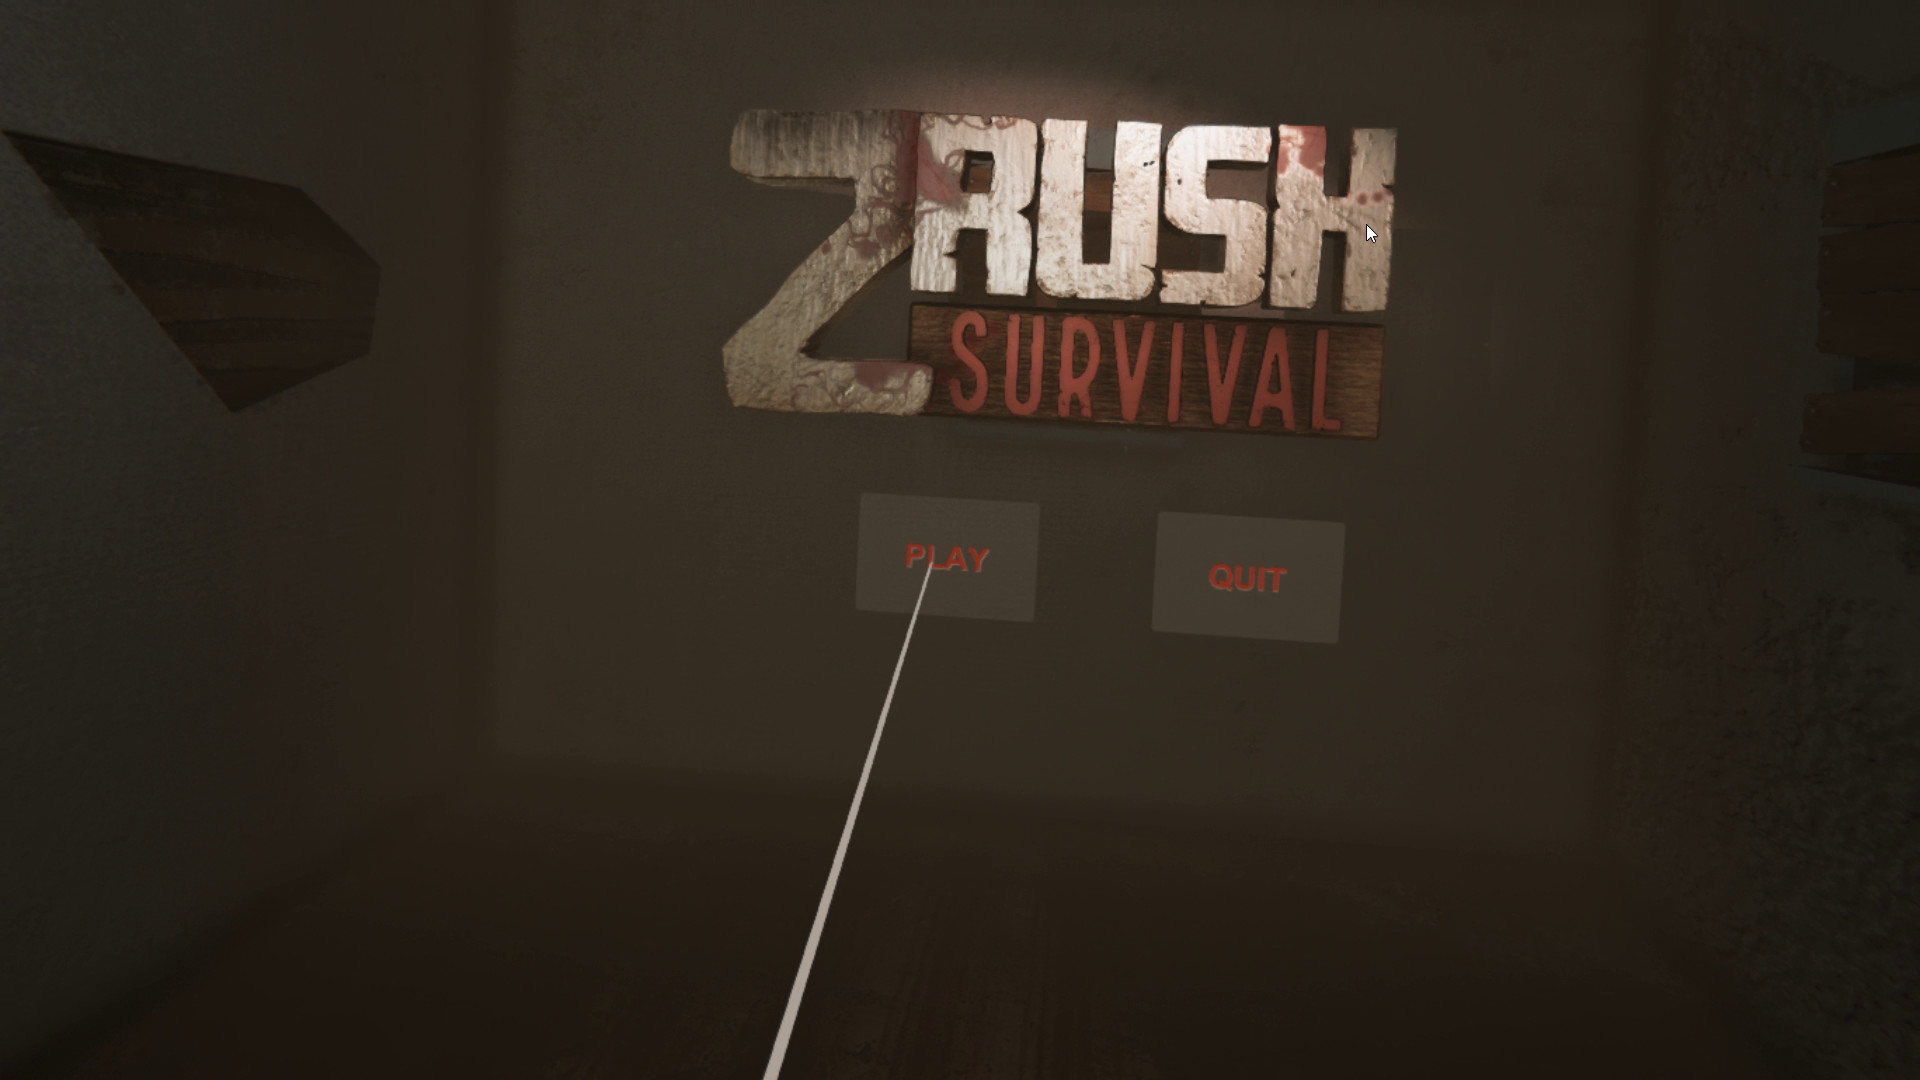 Z-Rush Survival Steam CD Key